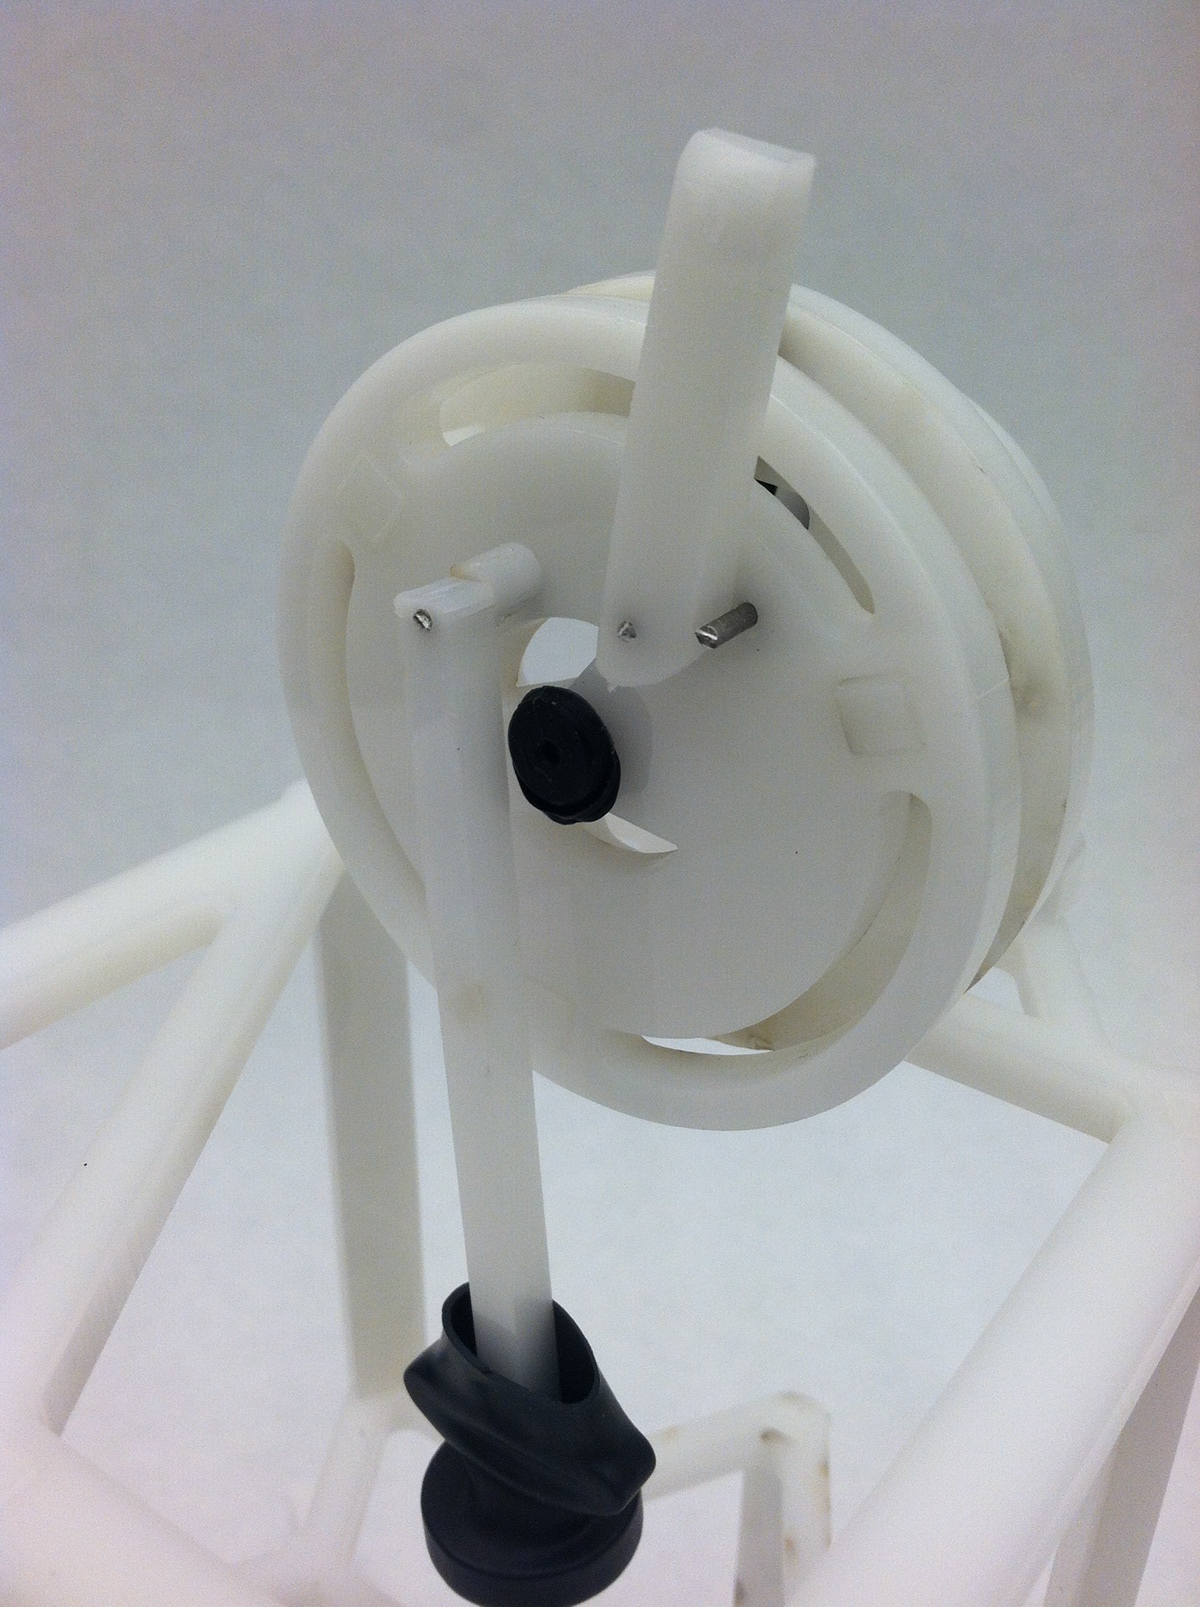 Adobe Portfolio biomimicry toy children mechanical design process